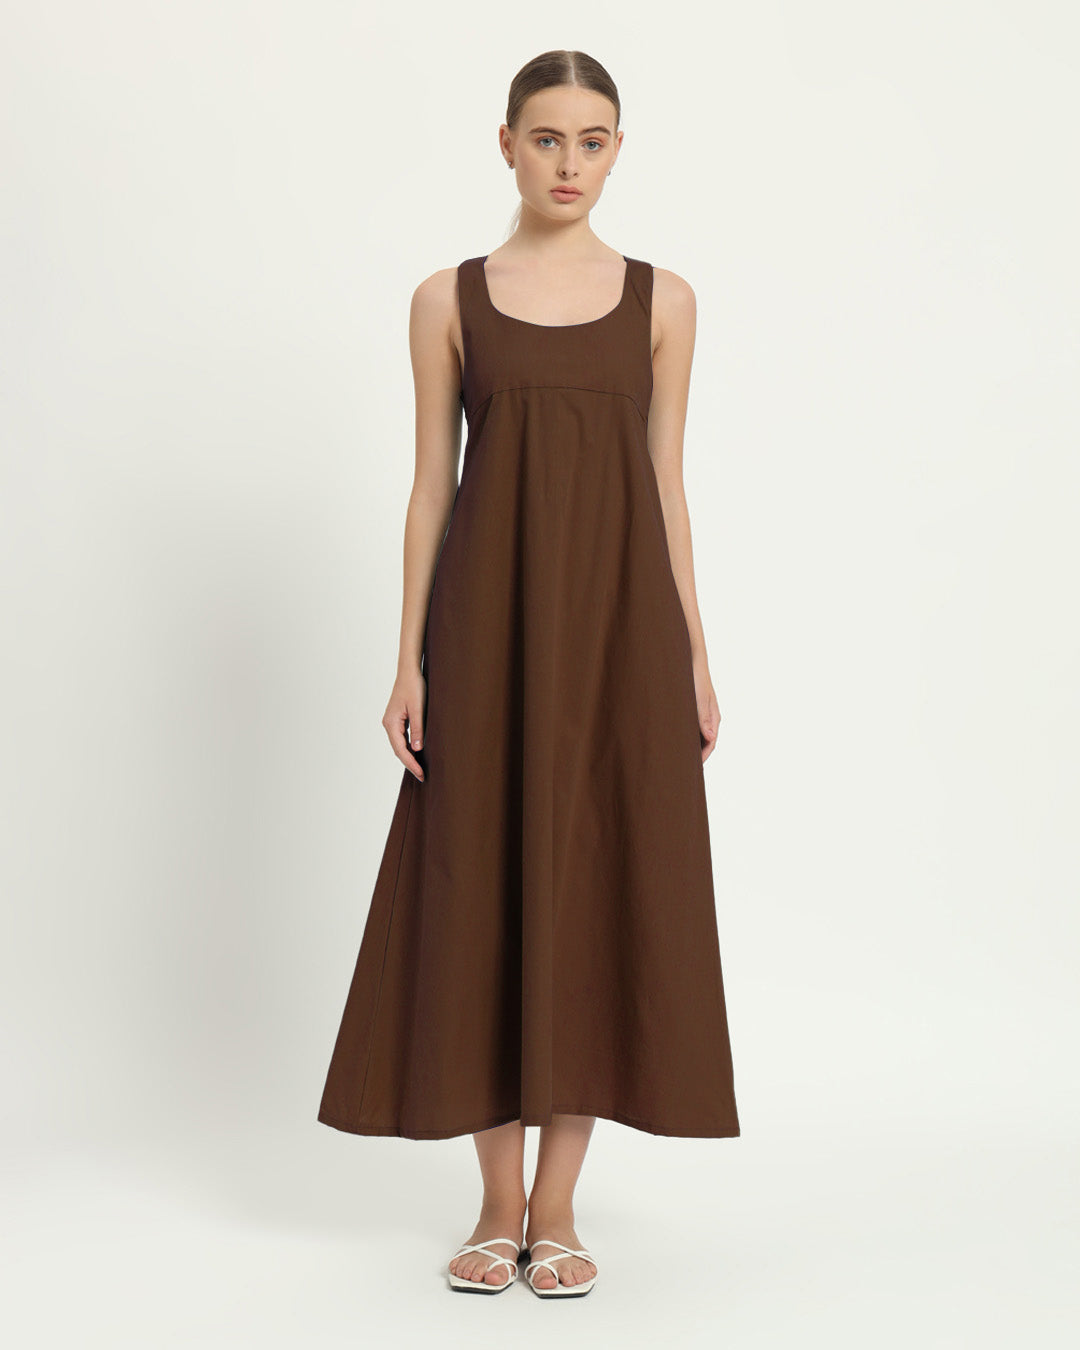 The Magdala Nutshell Cotton Dress